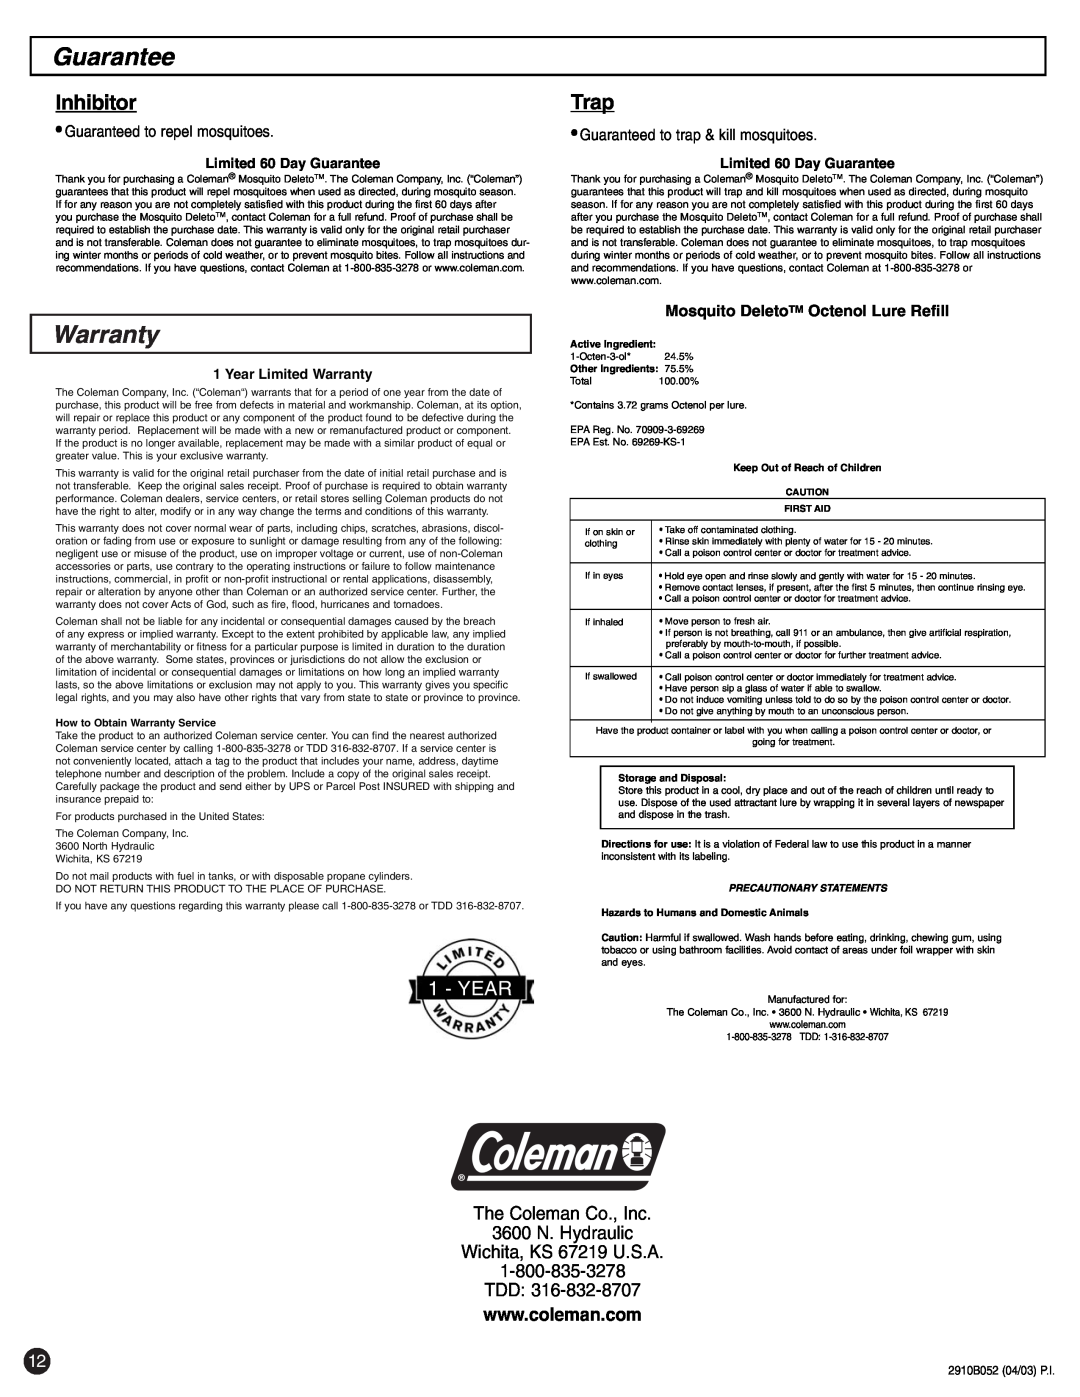 Coleman 2200 Guarantee, Warranty, Inhibitor, Trap, Year, The Coleman Co., Inc 3600 N. Hydraulic Wichita, KS 67219 U.S.A 